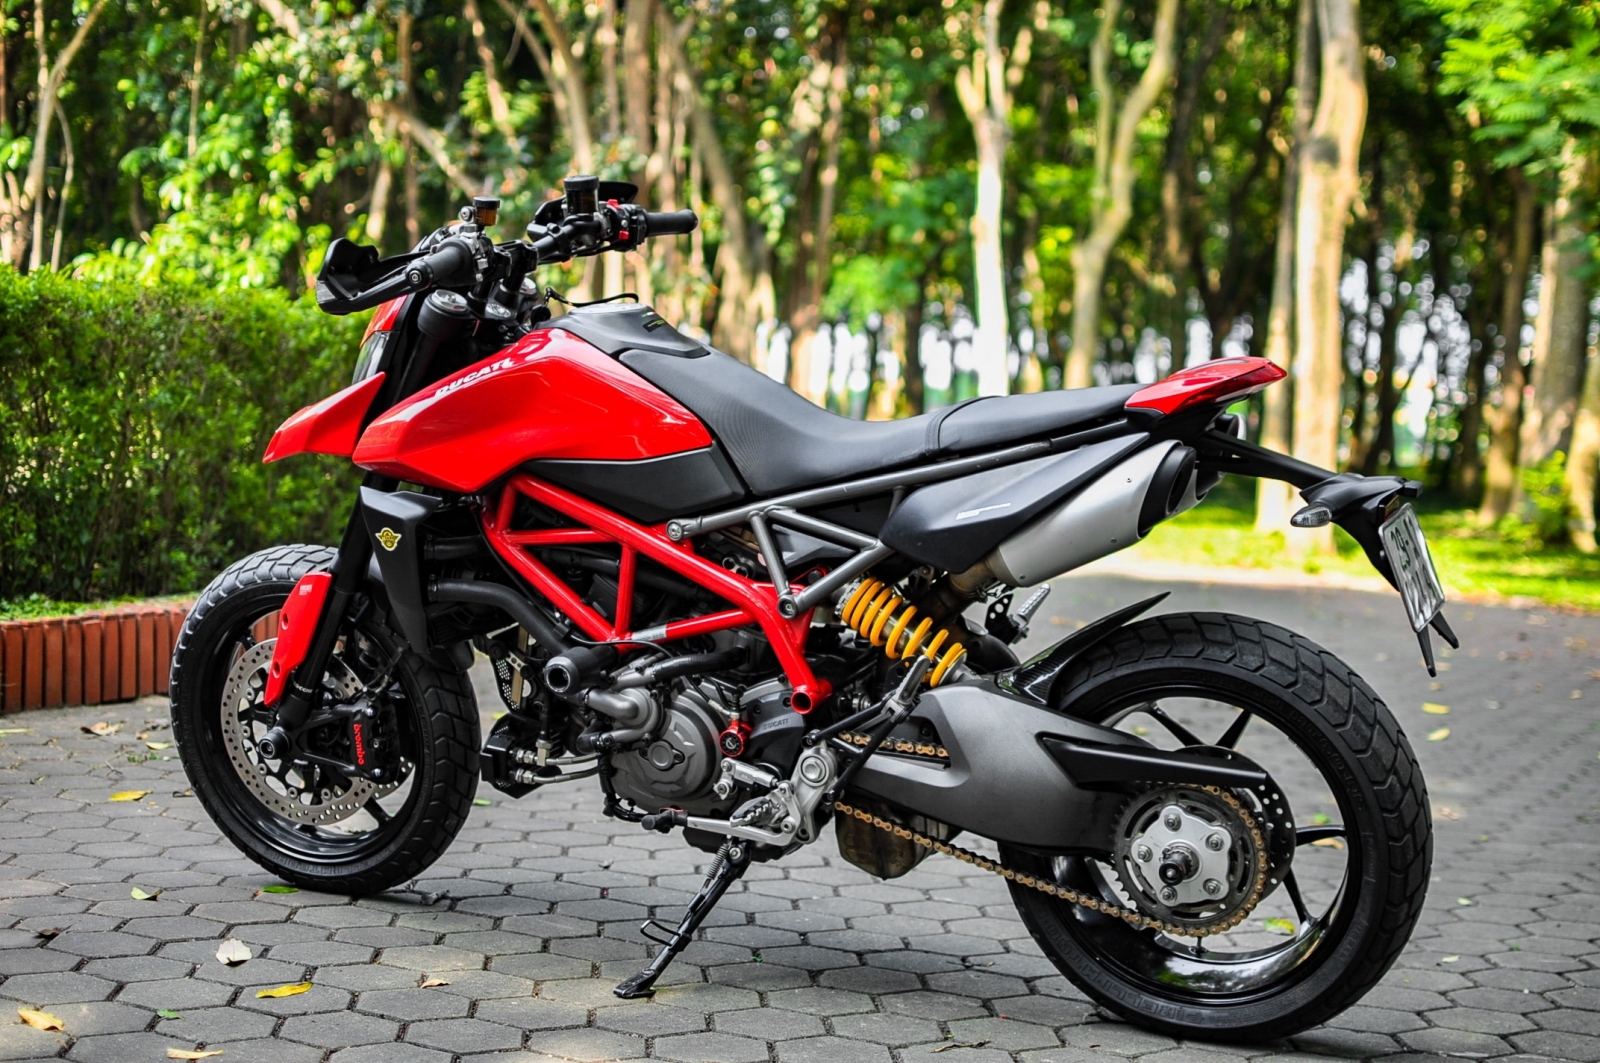  Ducati Hypermotard 950 2019 